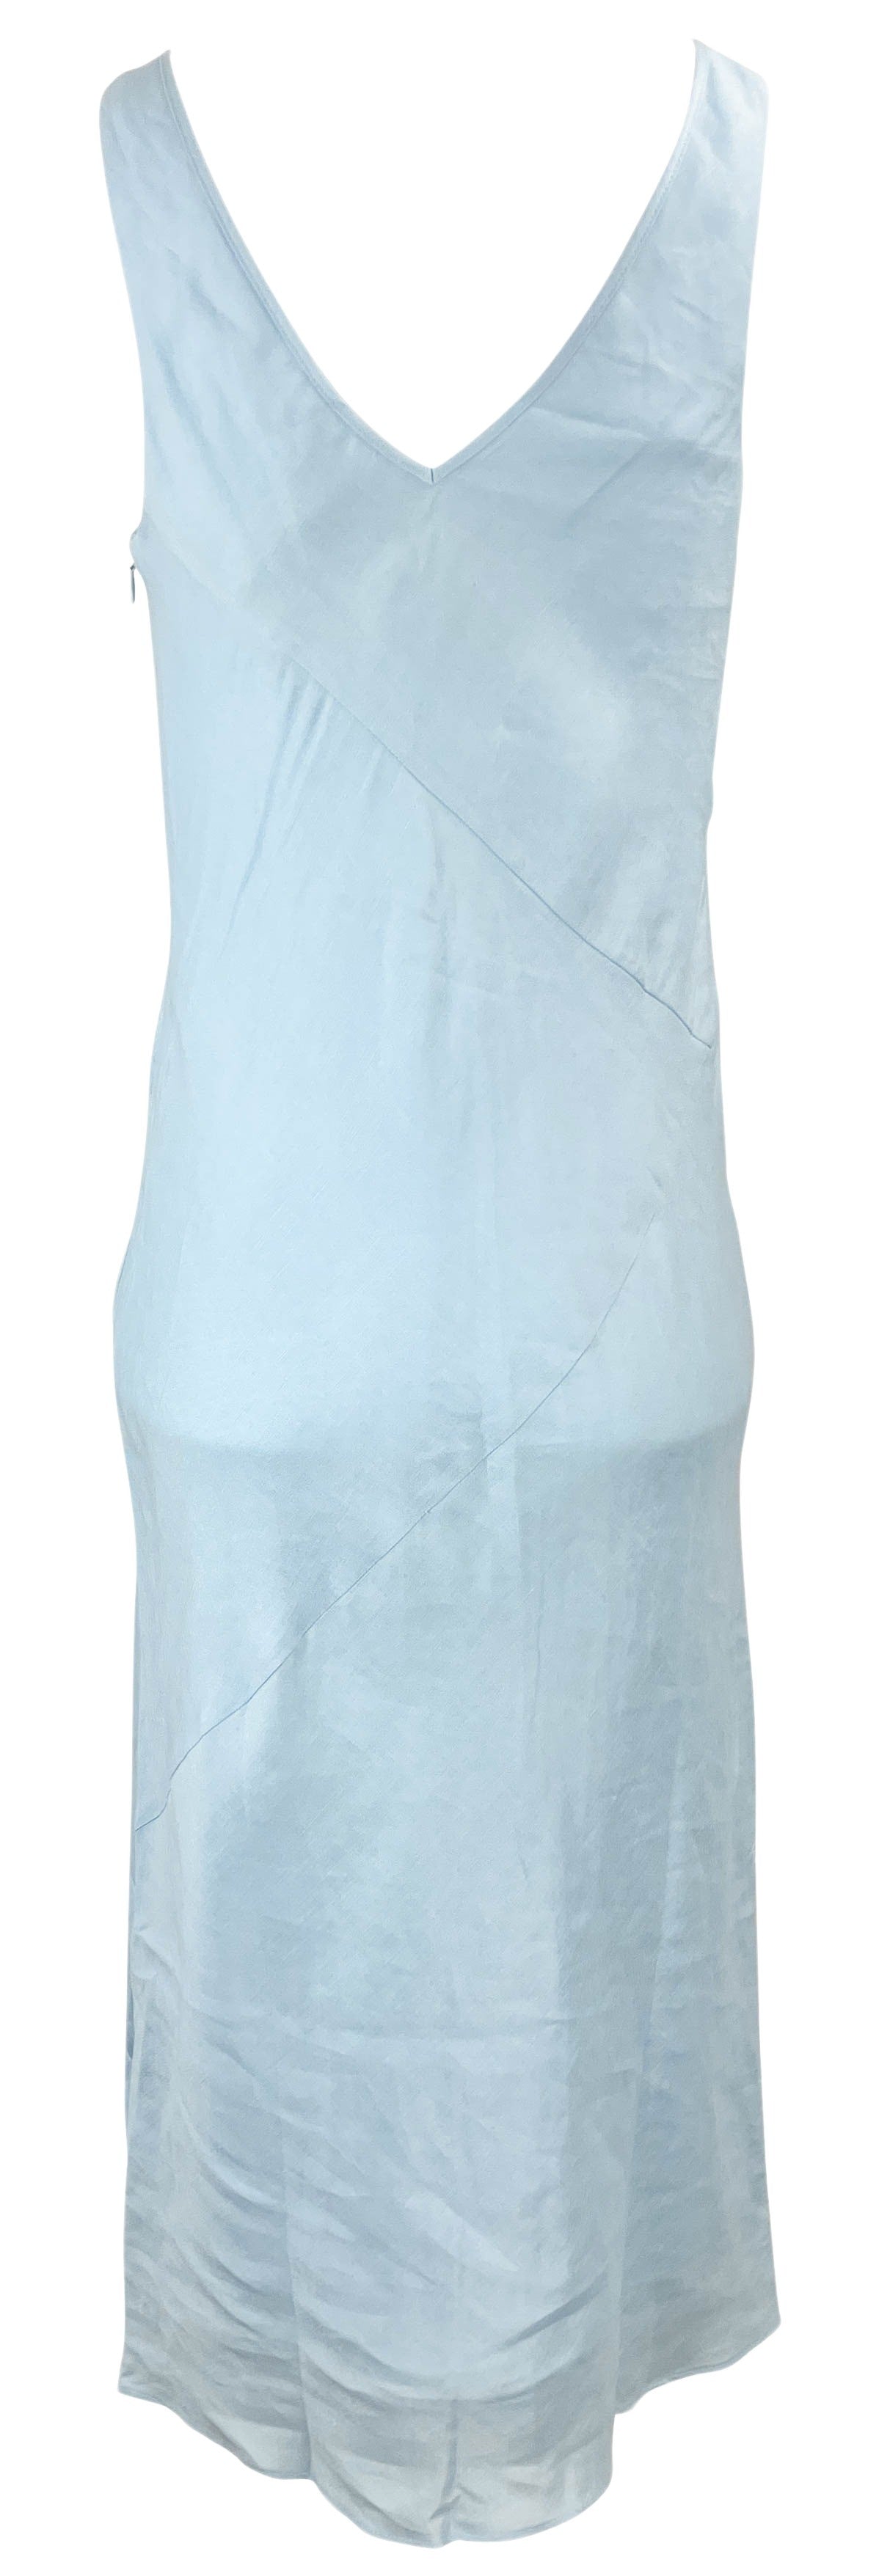 Amanda Uprichard Clarisse Dress in Powder Blue - Discounts on Amanda Uprichard at UAL